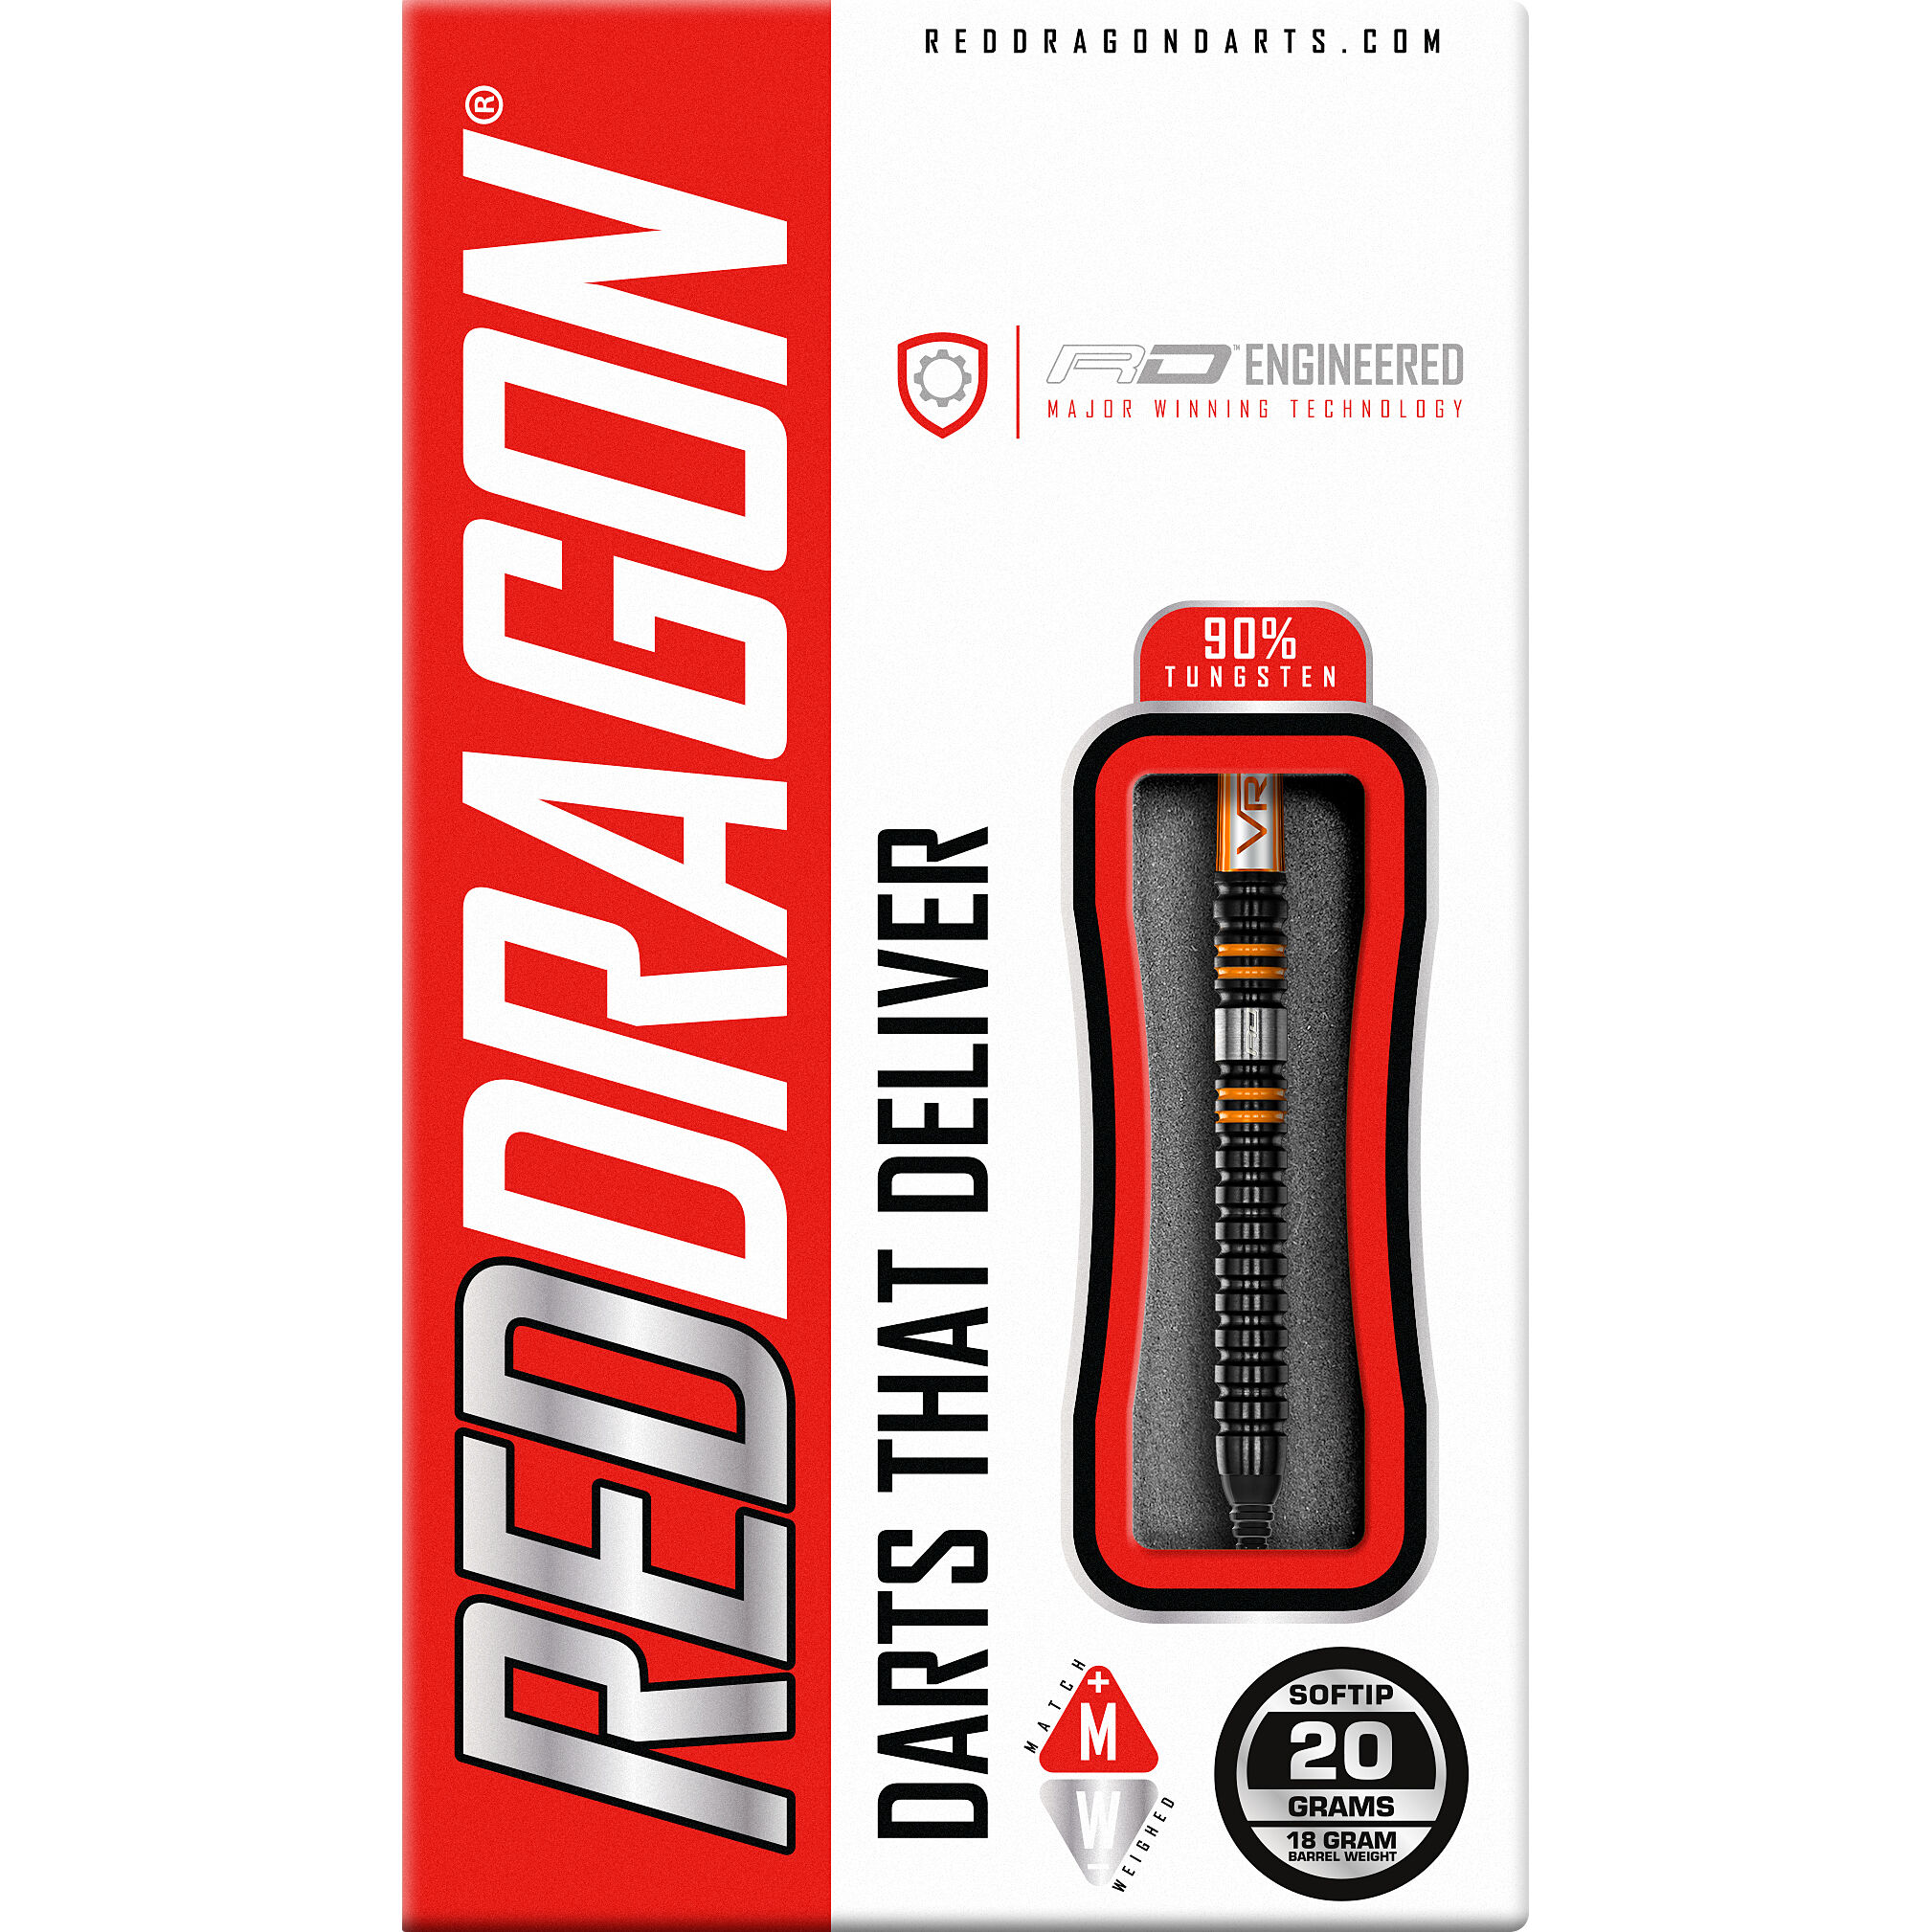 Red Dragon - Amberjack Pro Typ A - Softdart